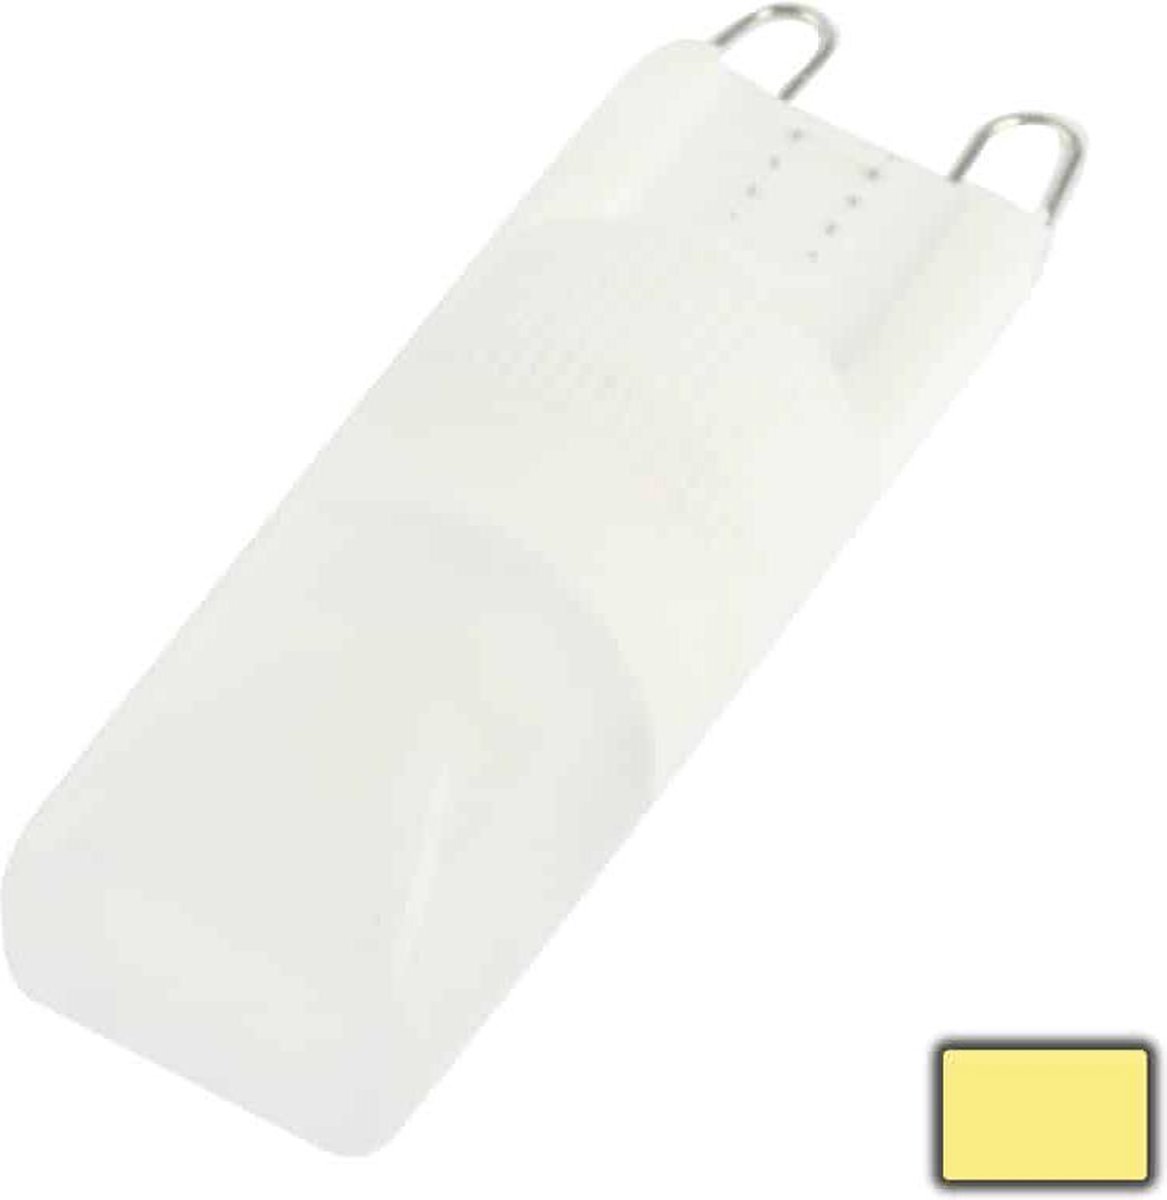 BSMEAN 5Pcs/10Pcs G9 Led Bulb Dimmable Warm White/White 5W 420Lm Light 360  Degree Angle Light Bulb | G9 Warm White Led Bulb Lamp Light High Projector  1w Ac 220-240v Hot | tk.gov.ba